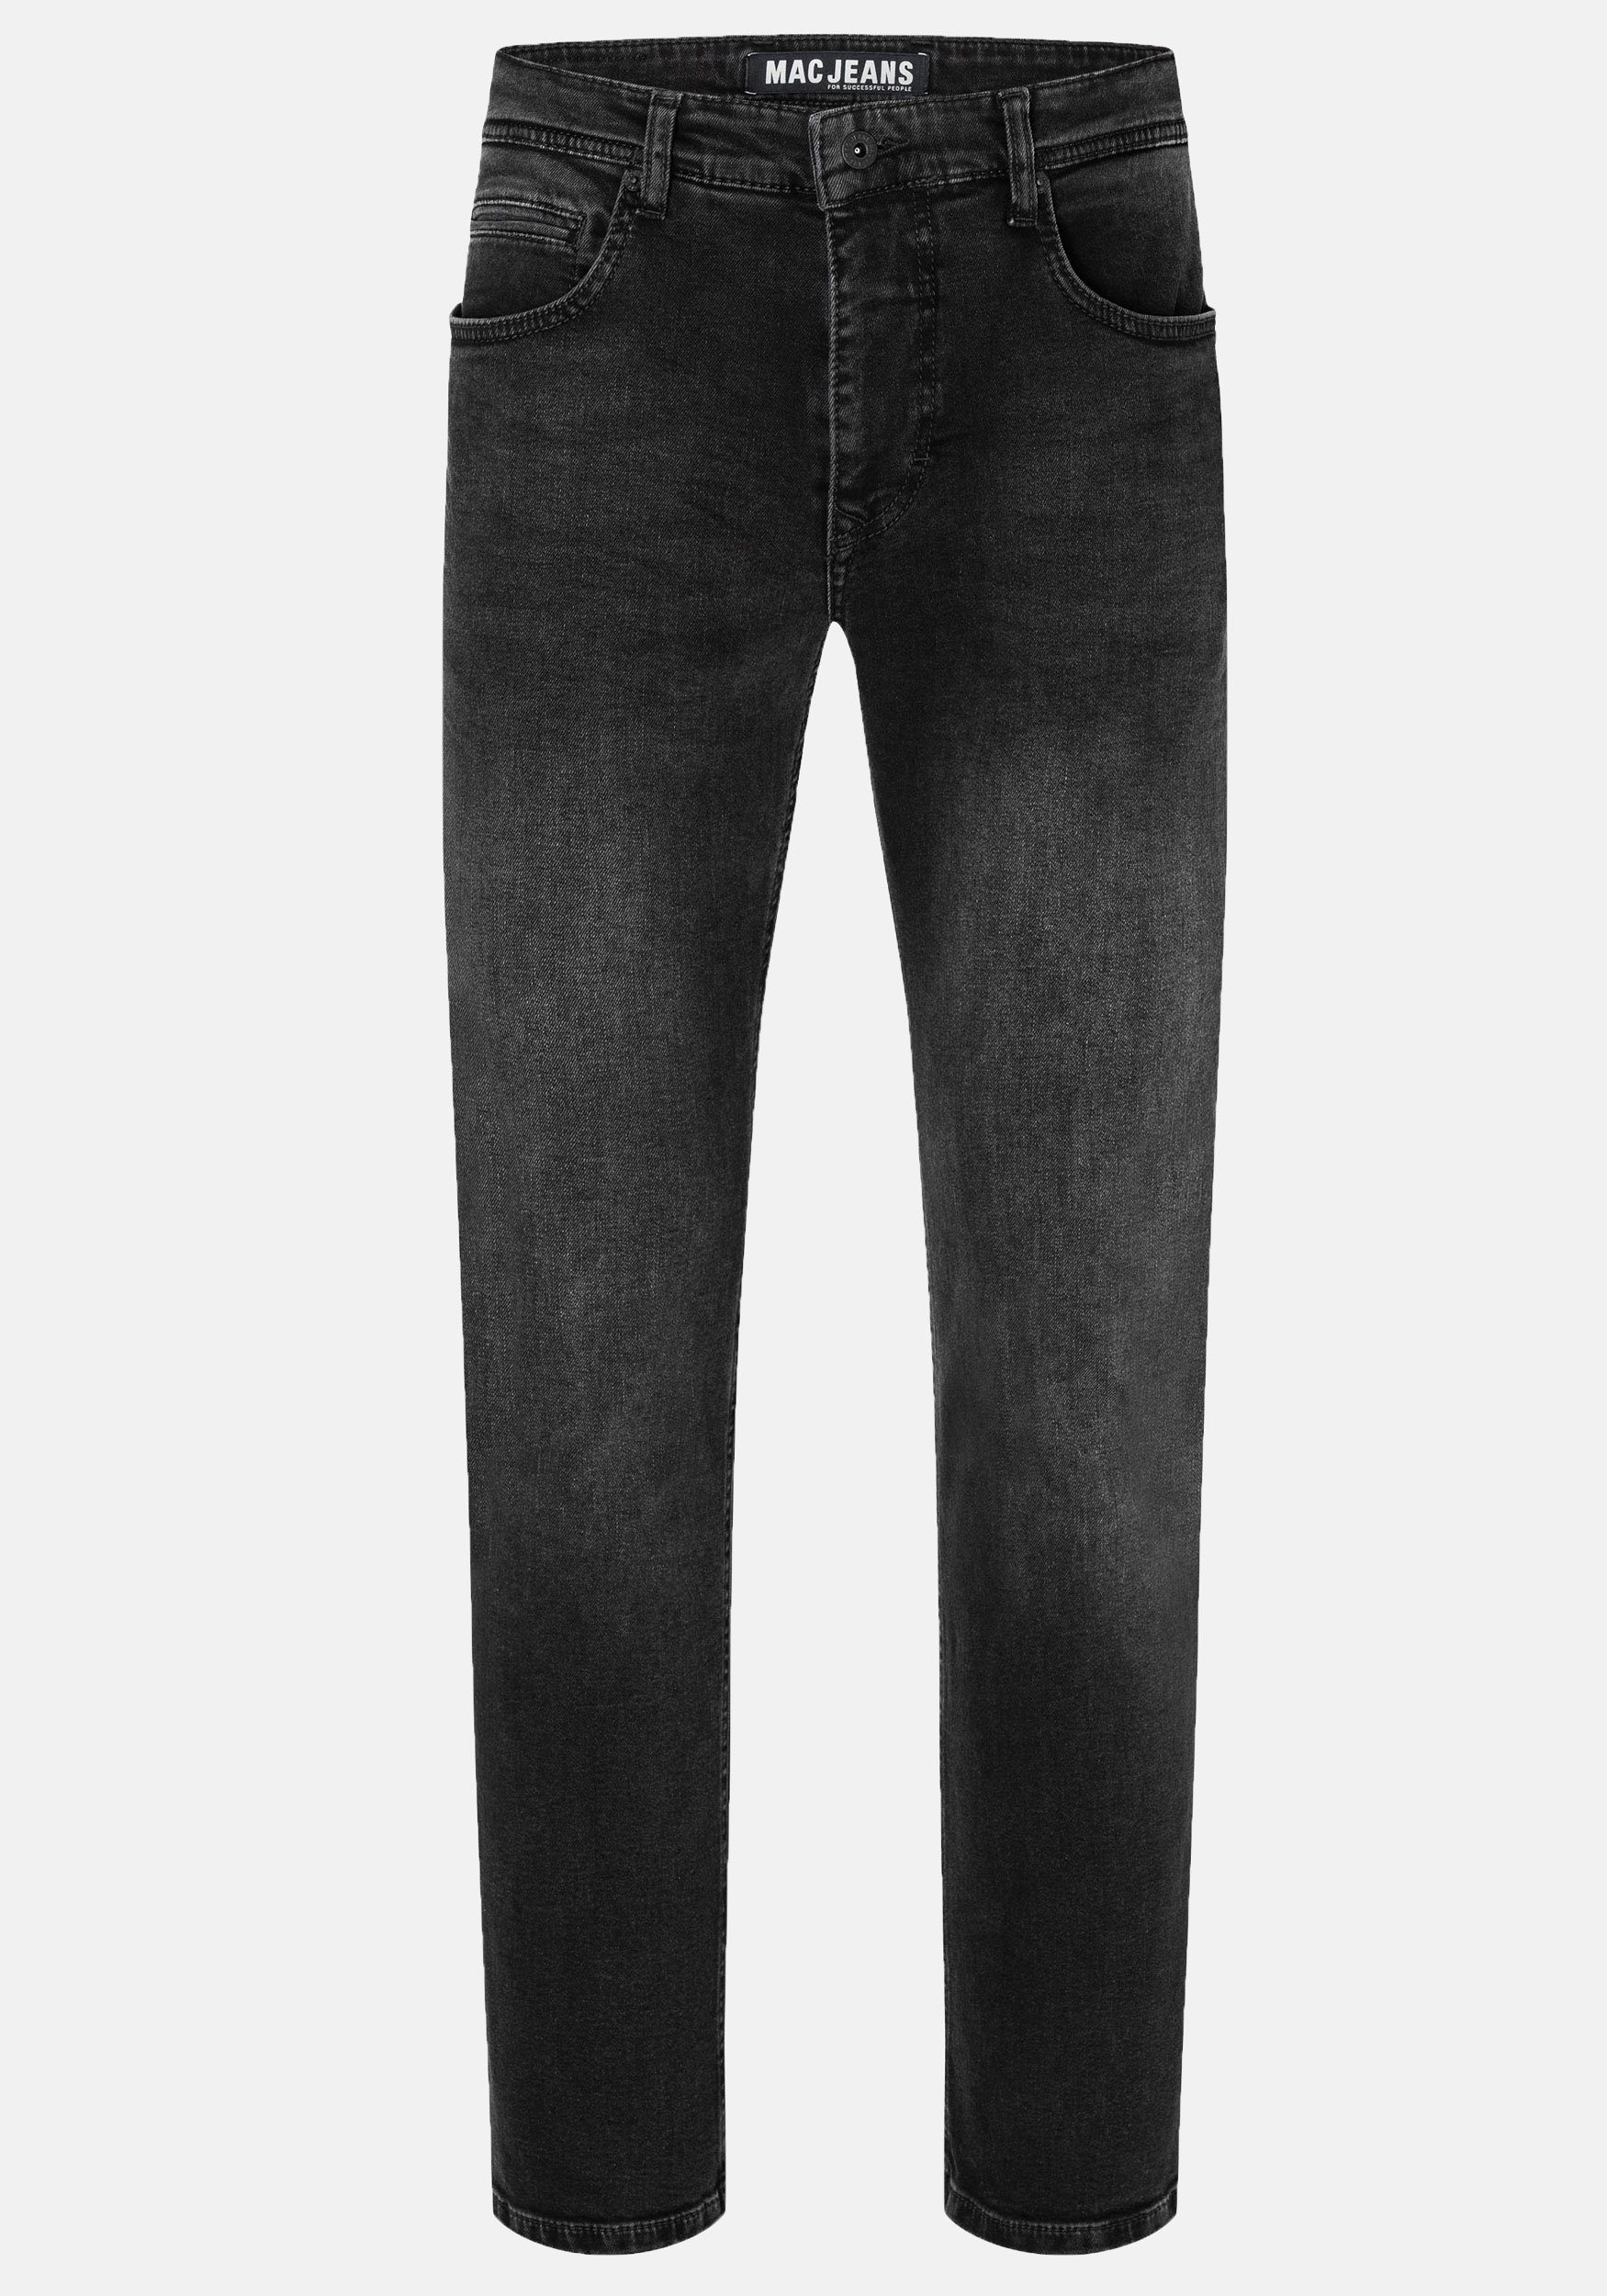 Arne stone Stretch MAC Denim used 5-Pocket-Jeans black